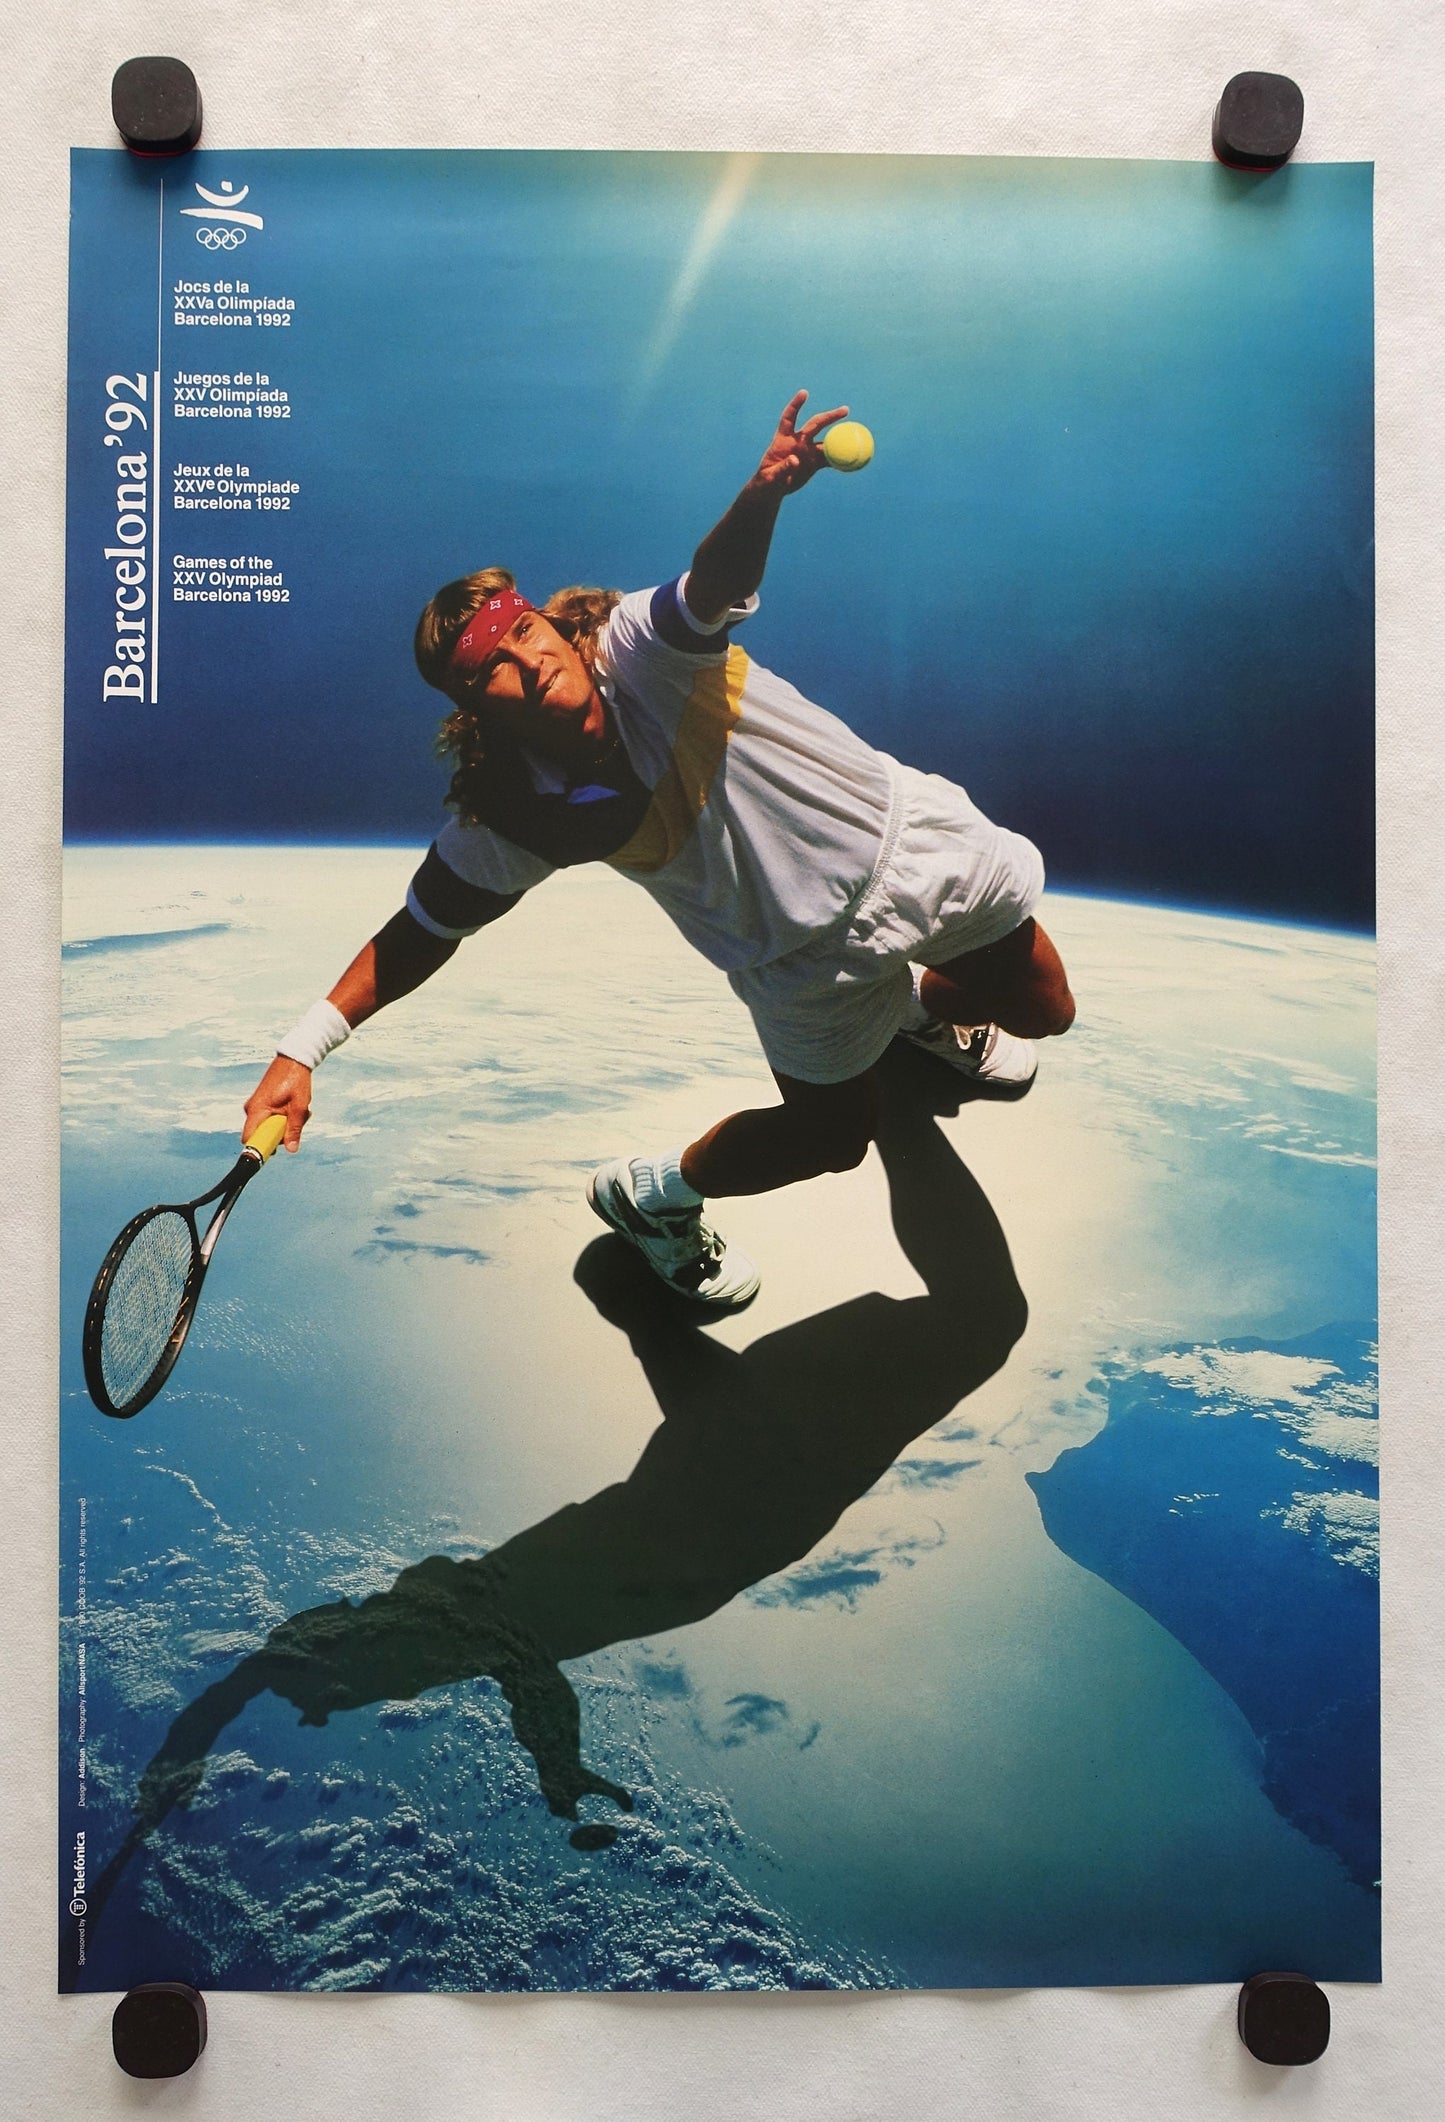 1992 Summer Olympic Games Tennis - Original Vintage Poster